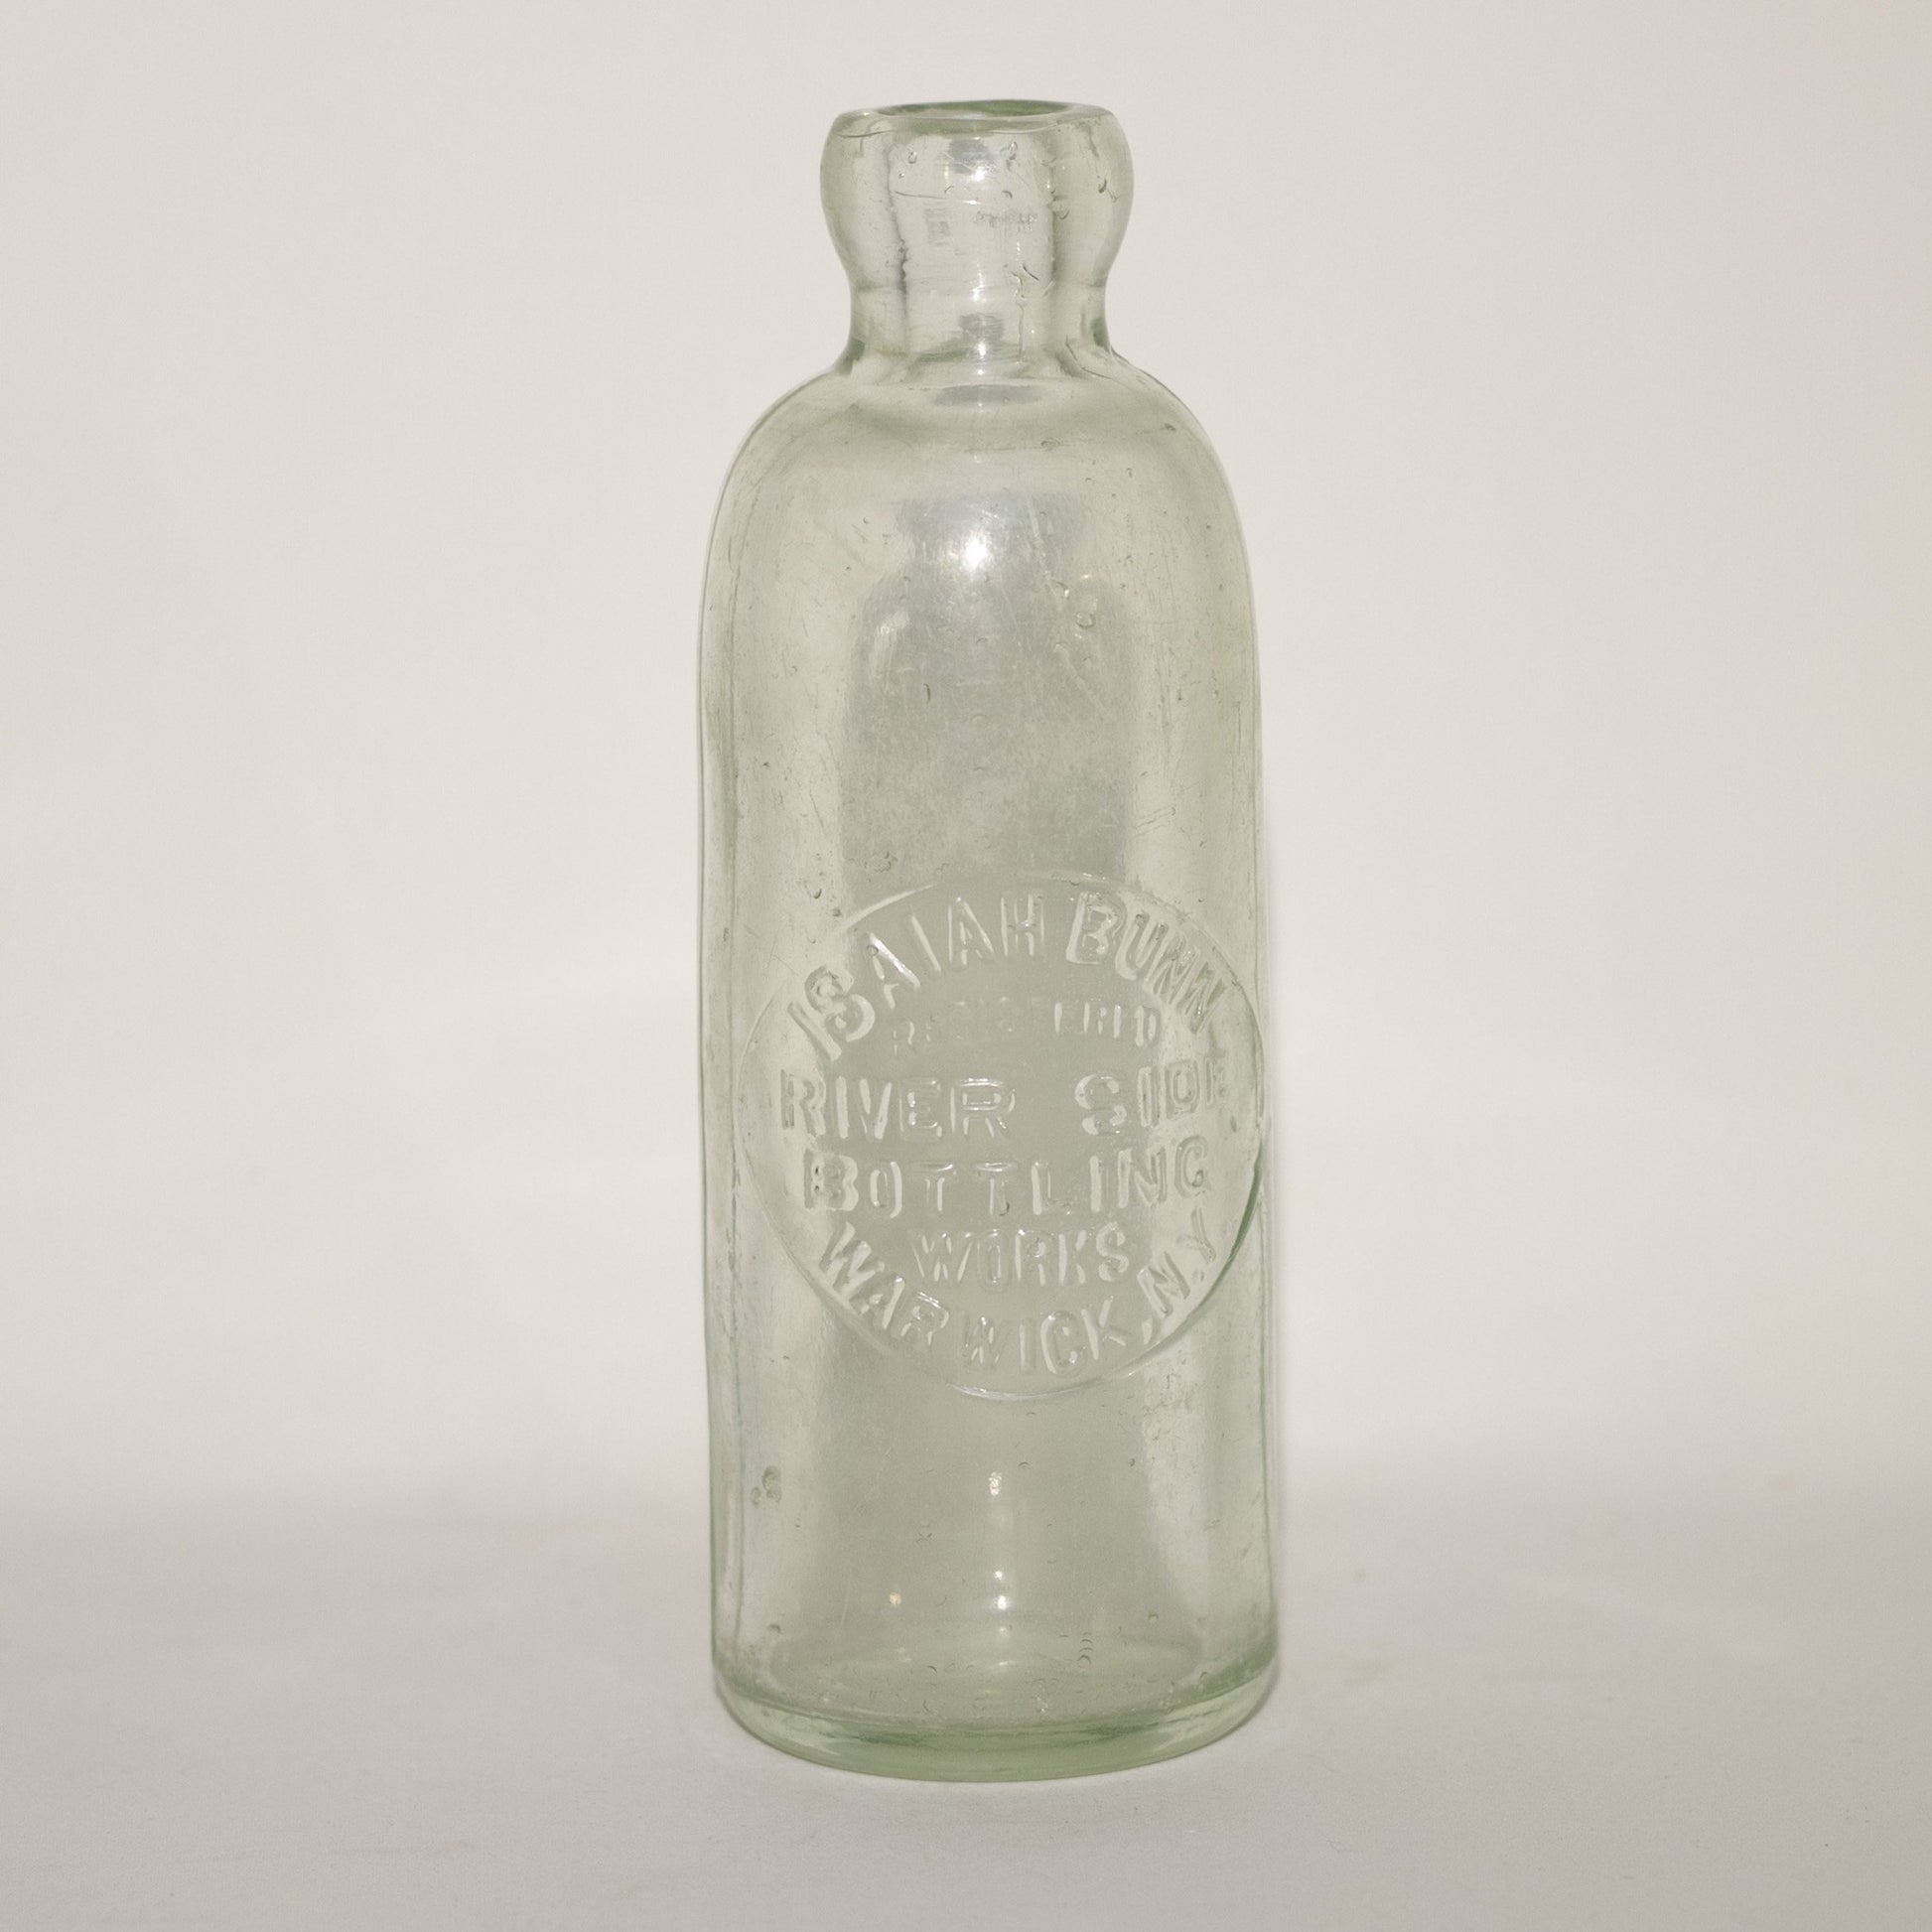 ISAIAH BUNN RIVERSIDE BOTTLING WORKS Warwick, NY Rare Hutchinson Bottle with Spelling Error Circa 1888 - 1893